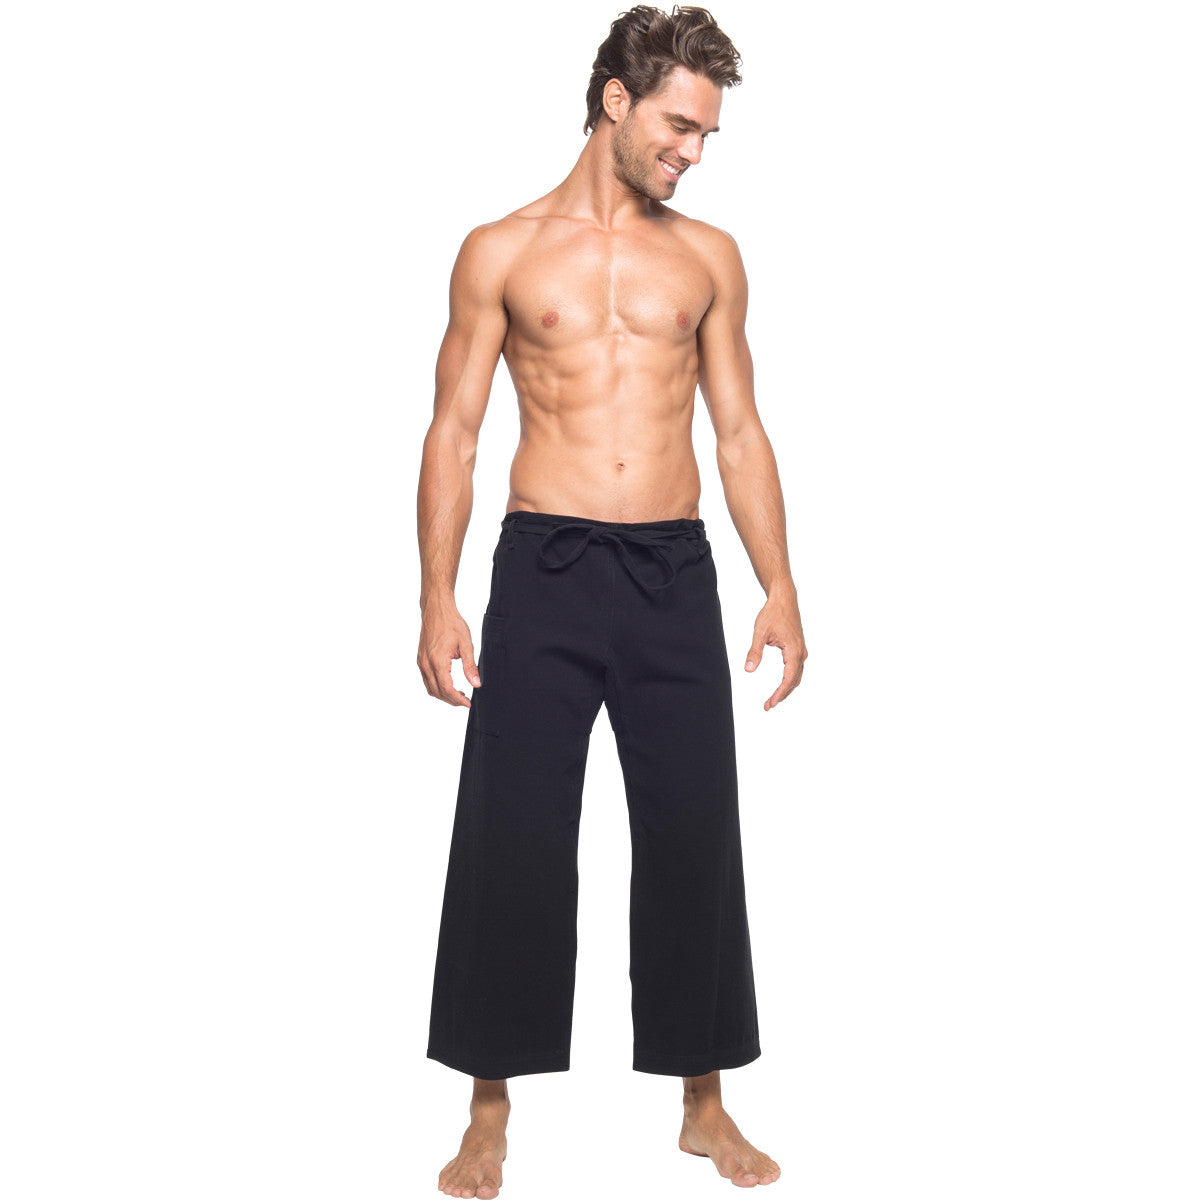 Men's Yoga Pants